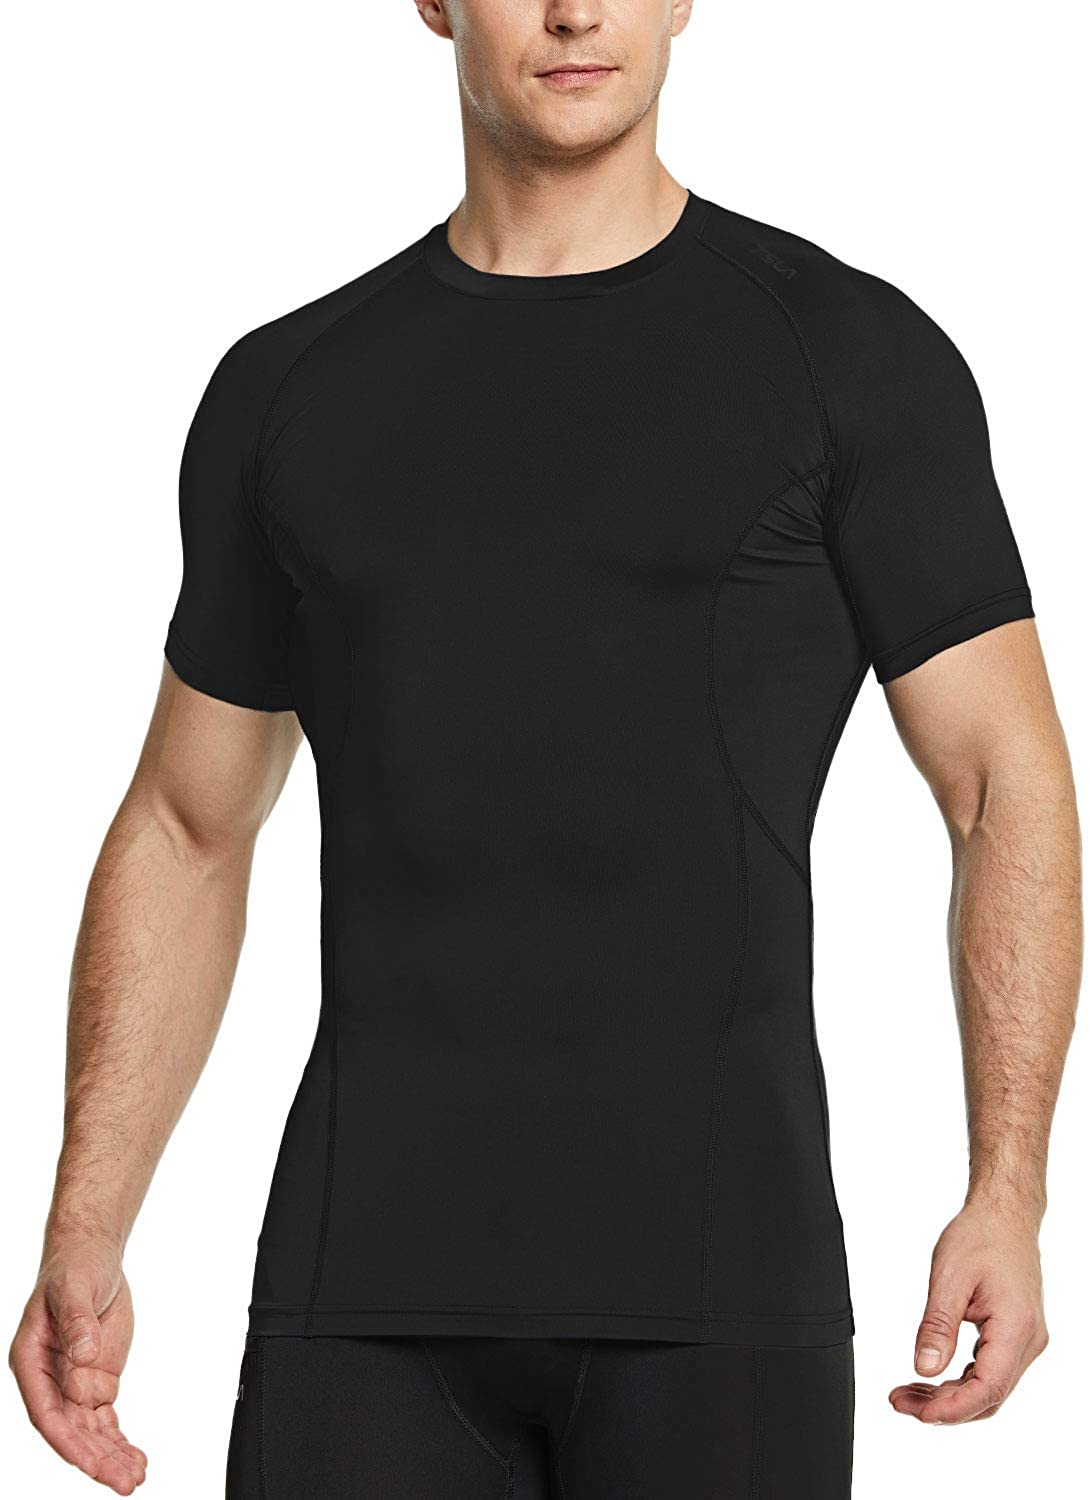 TSLA Tesla MUB23 Baselayer Short Sleeve Compression T-Shirt Charcoal/Black 